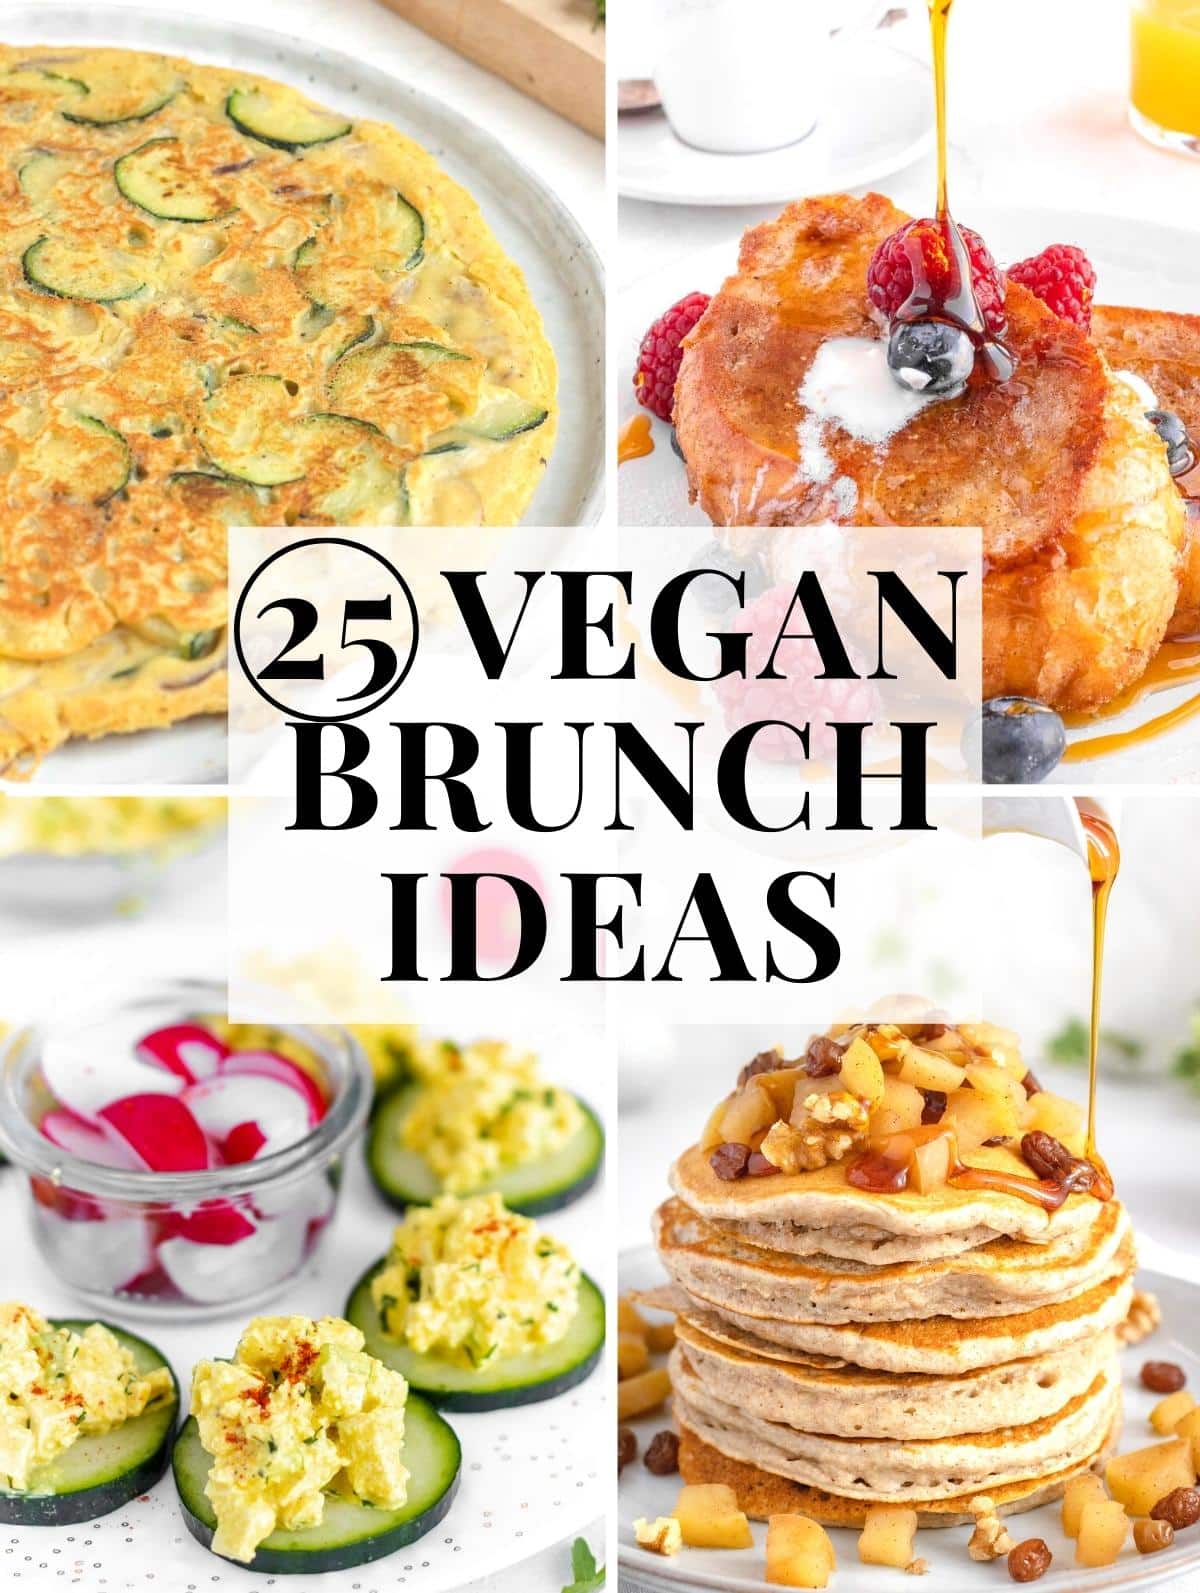 vegan brunch recipes including vegan frittata, french toast and vegan egg salad